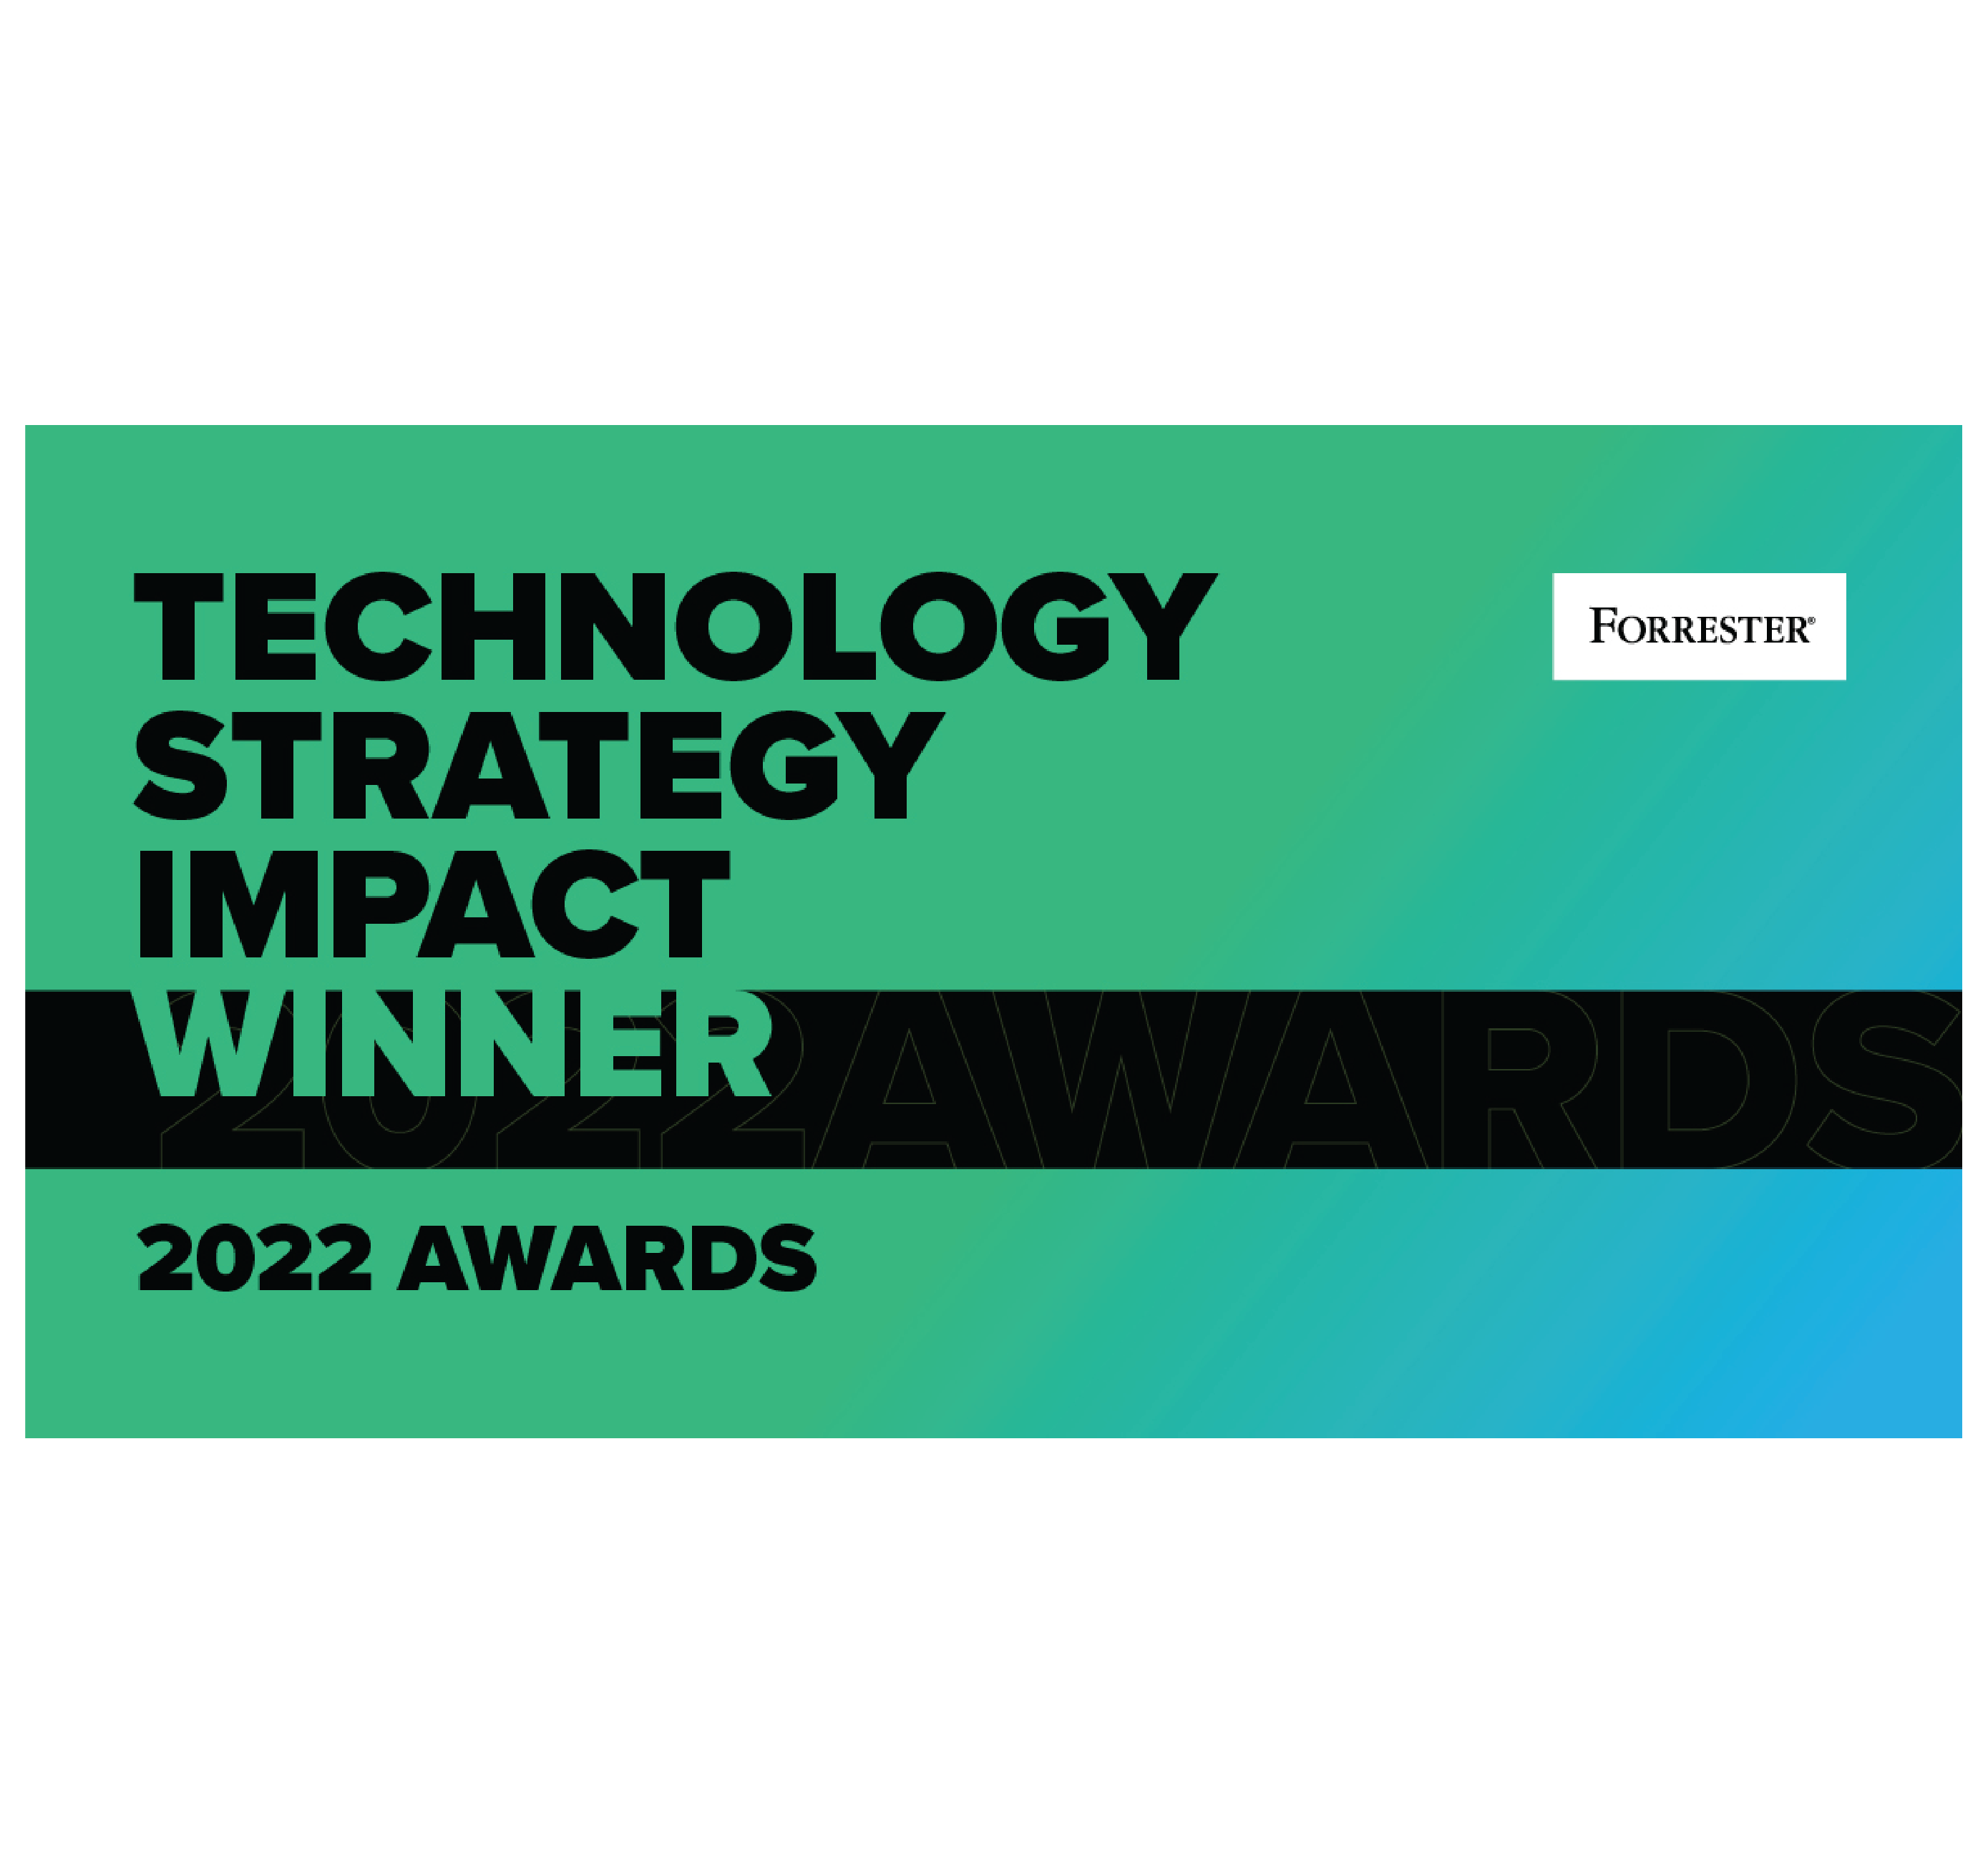 Forrester Technology Strategy Impact Winner 2022 award logo